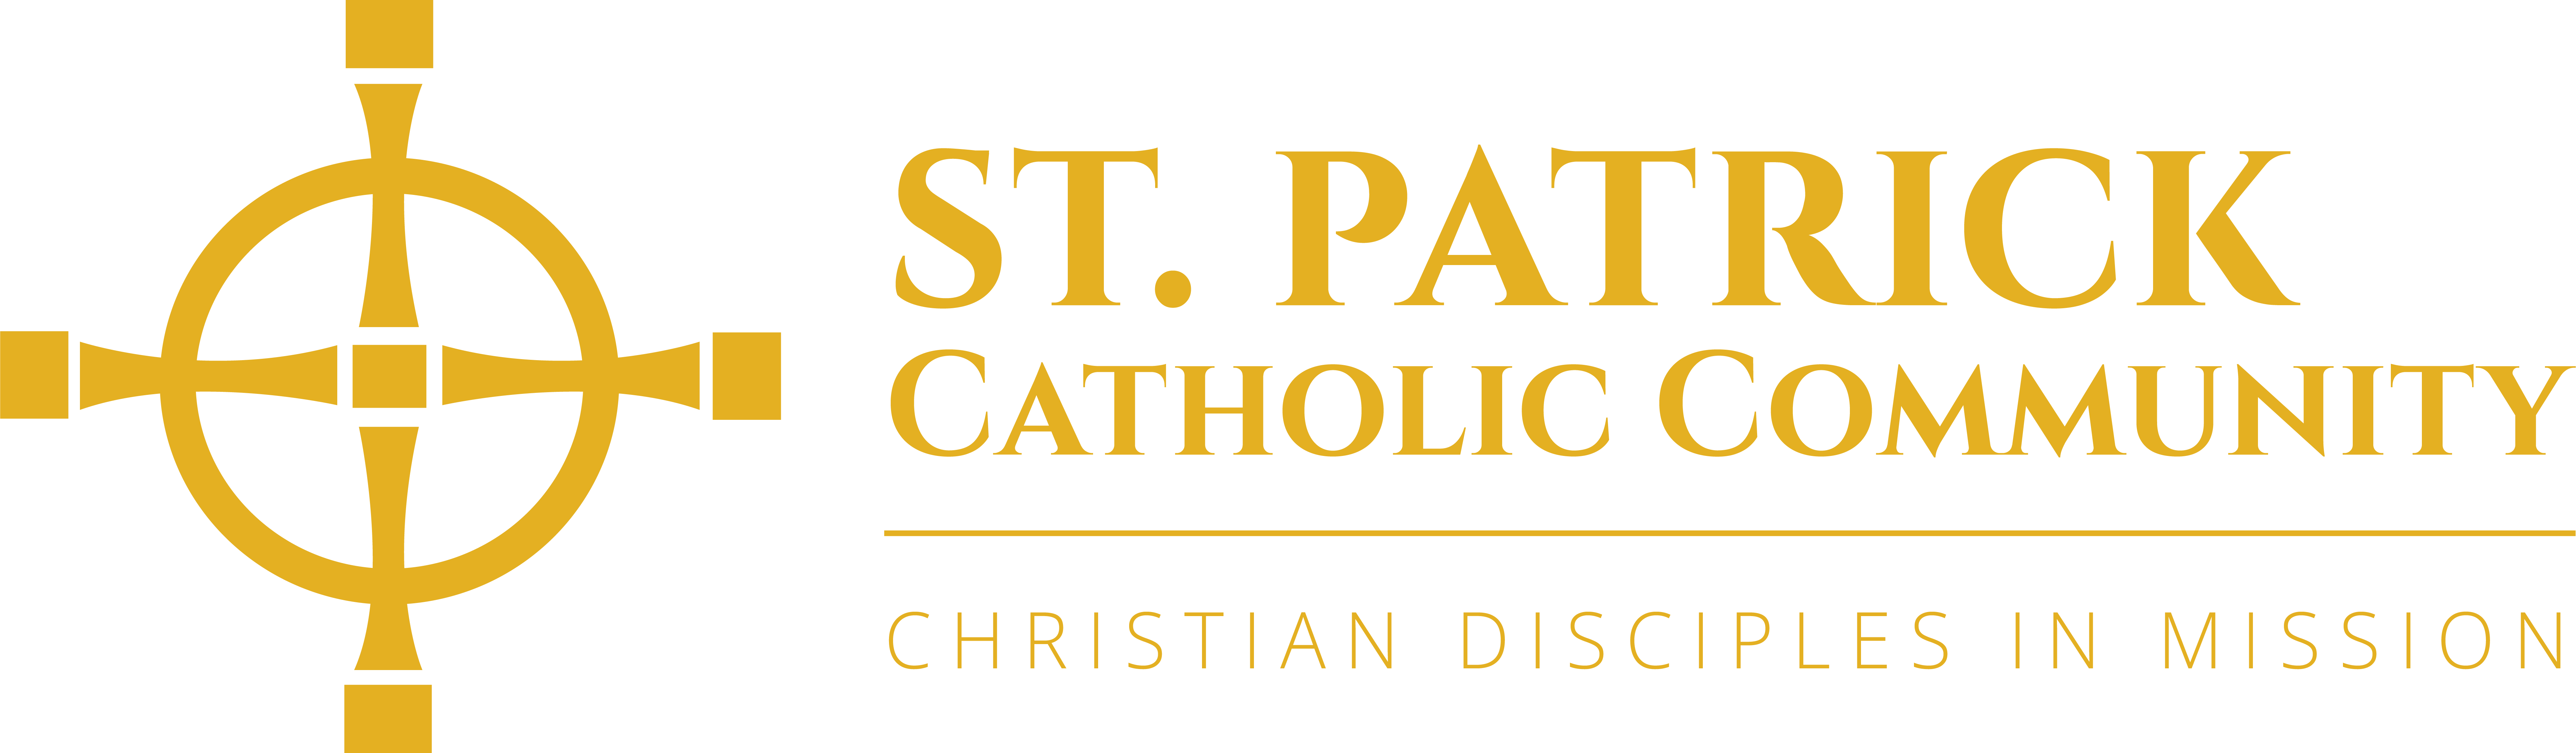 St. Patrick Catholic Community